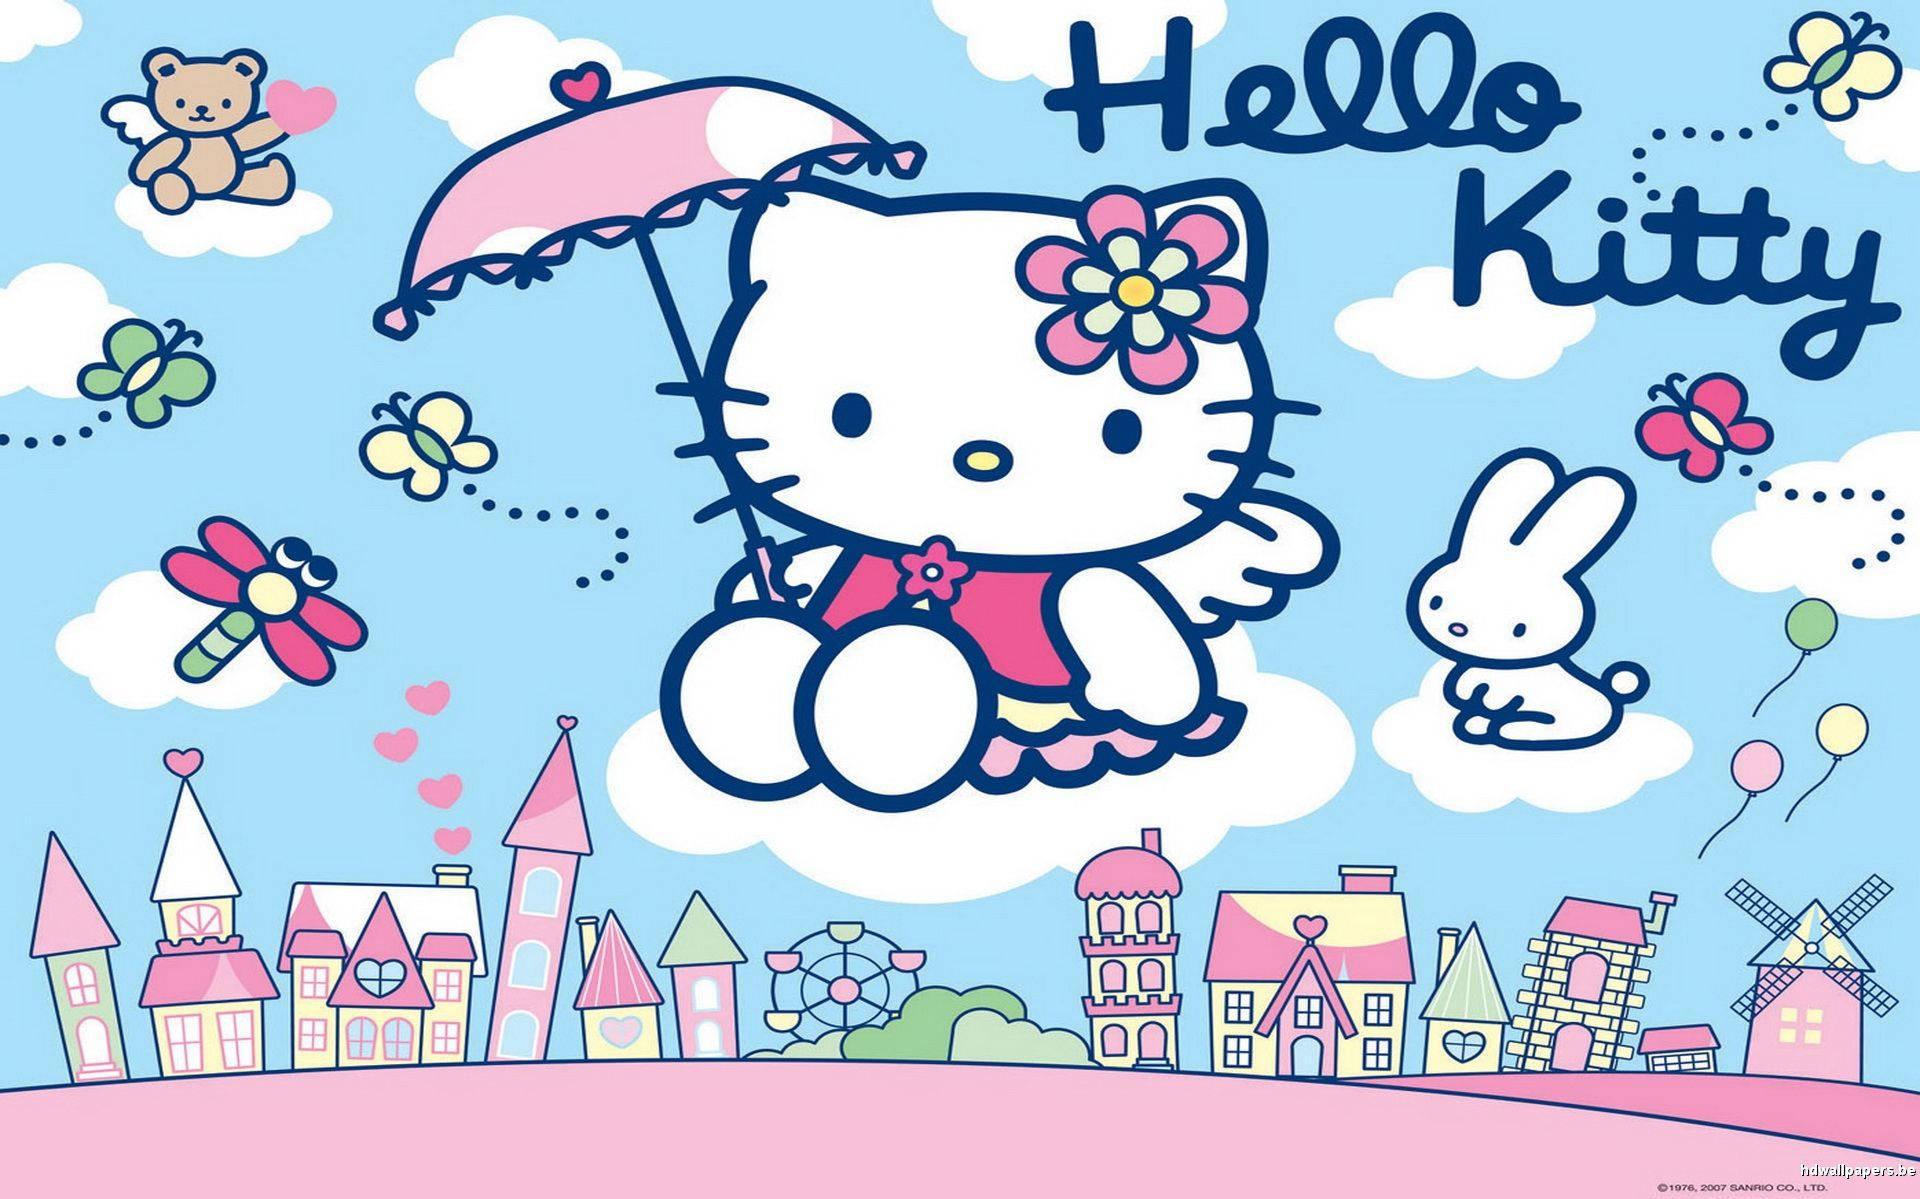  Hello Kitty Wallpapers